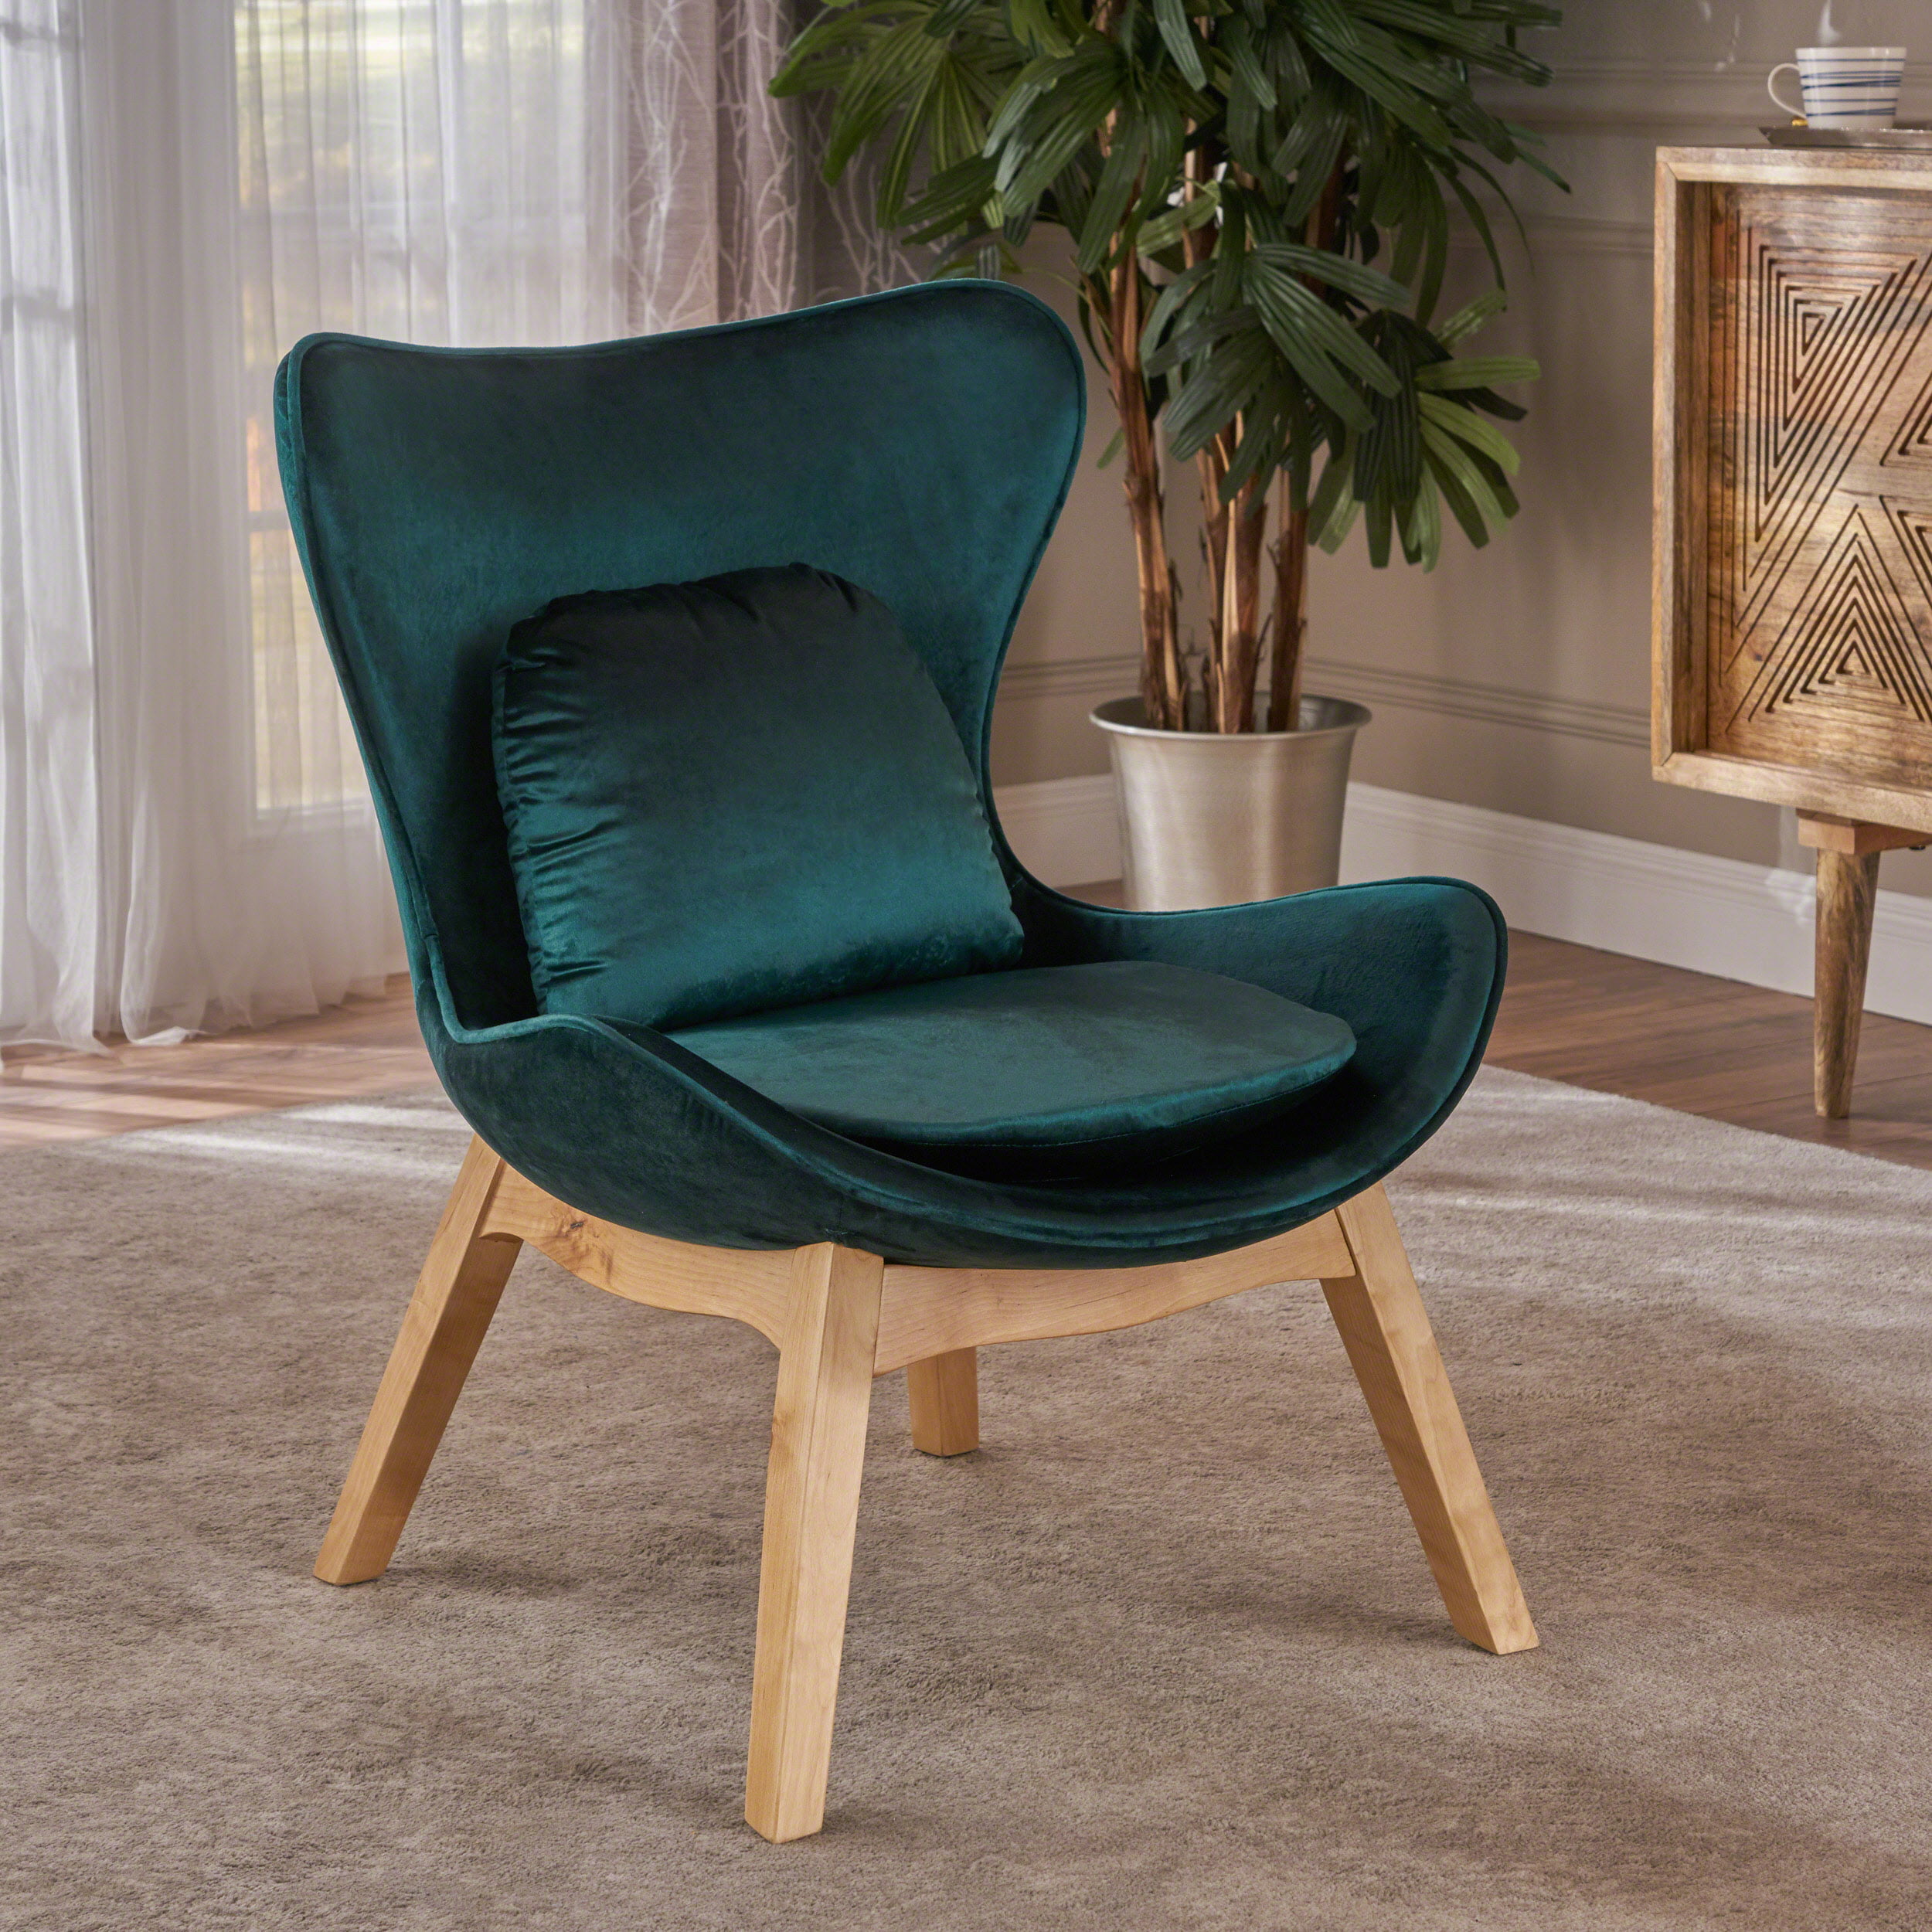 Noble House Mid Century Modern Velvet Accent Chair,Teal - Walmart.com